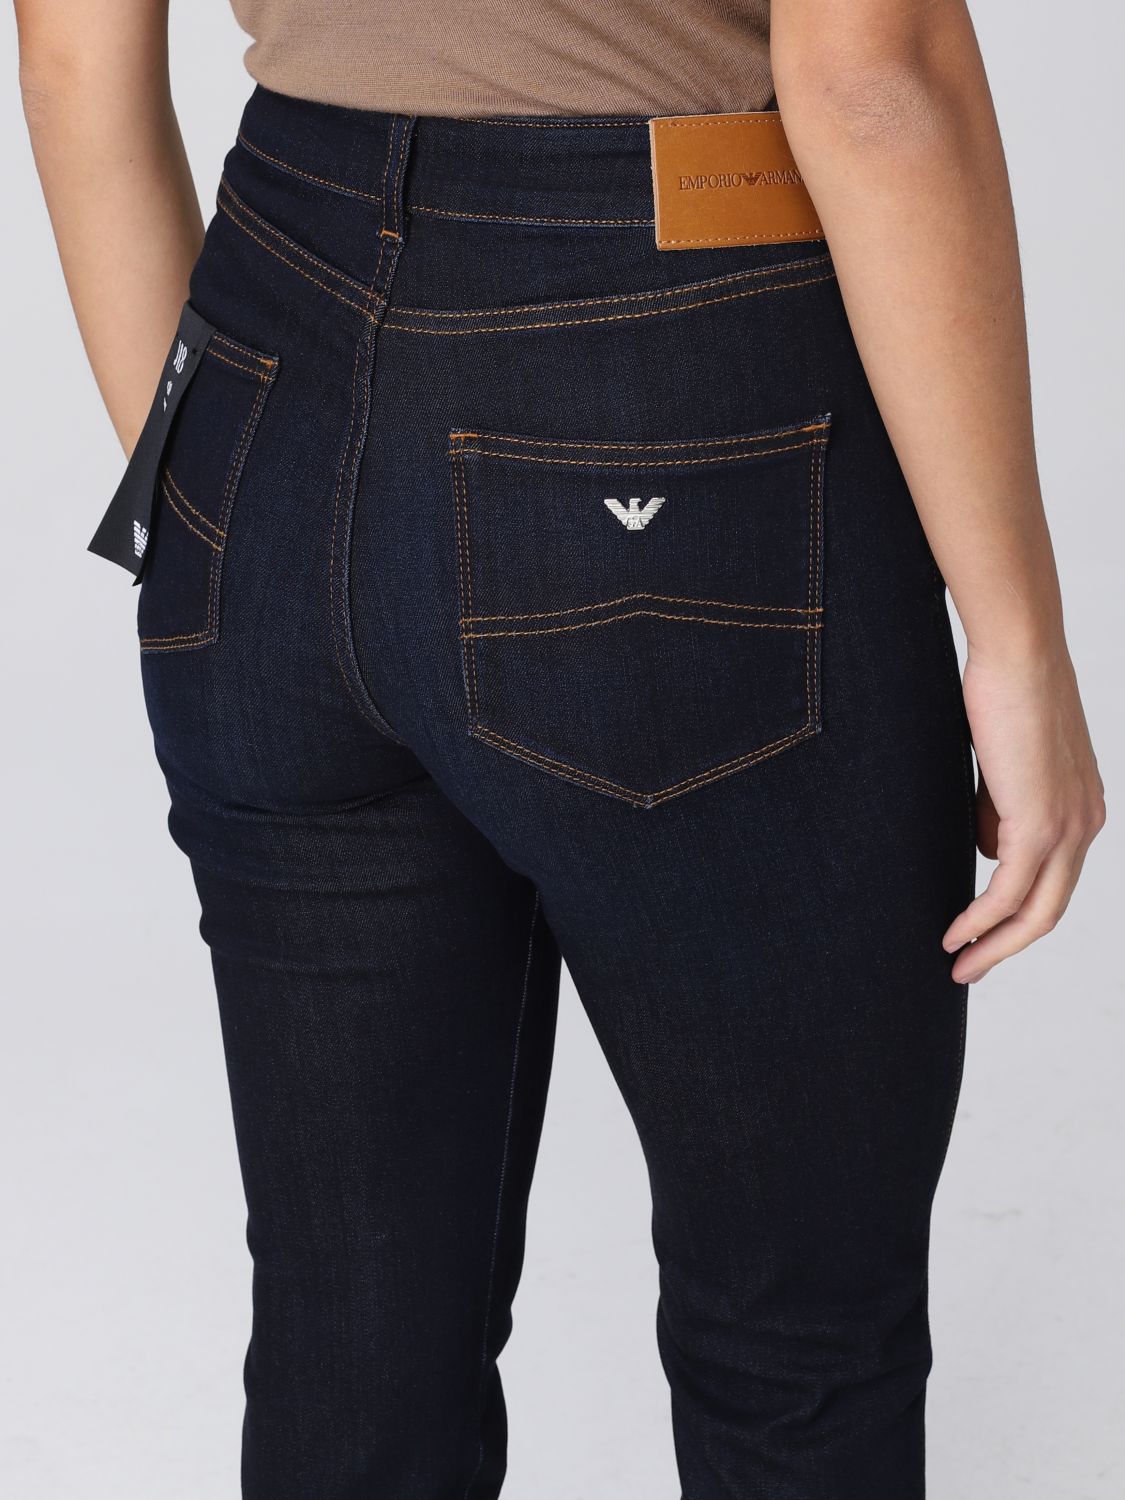 EMPORIO ARMANI: jeans for woman - Denim | Emporio Armani jeans 8N2J182DL3Z  online on 